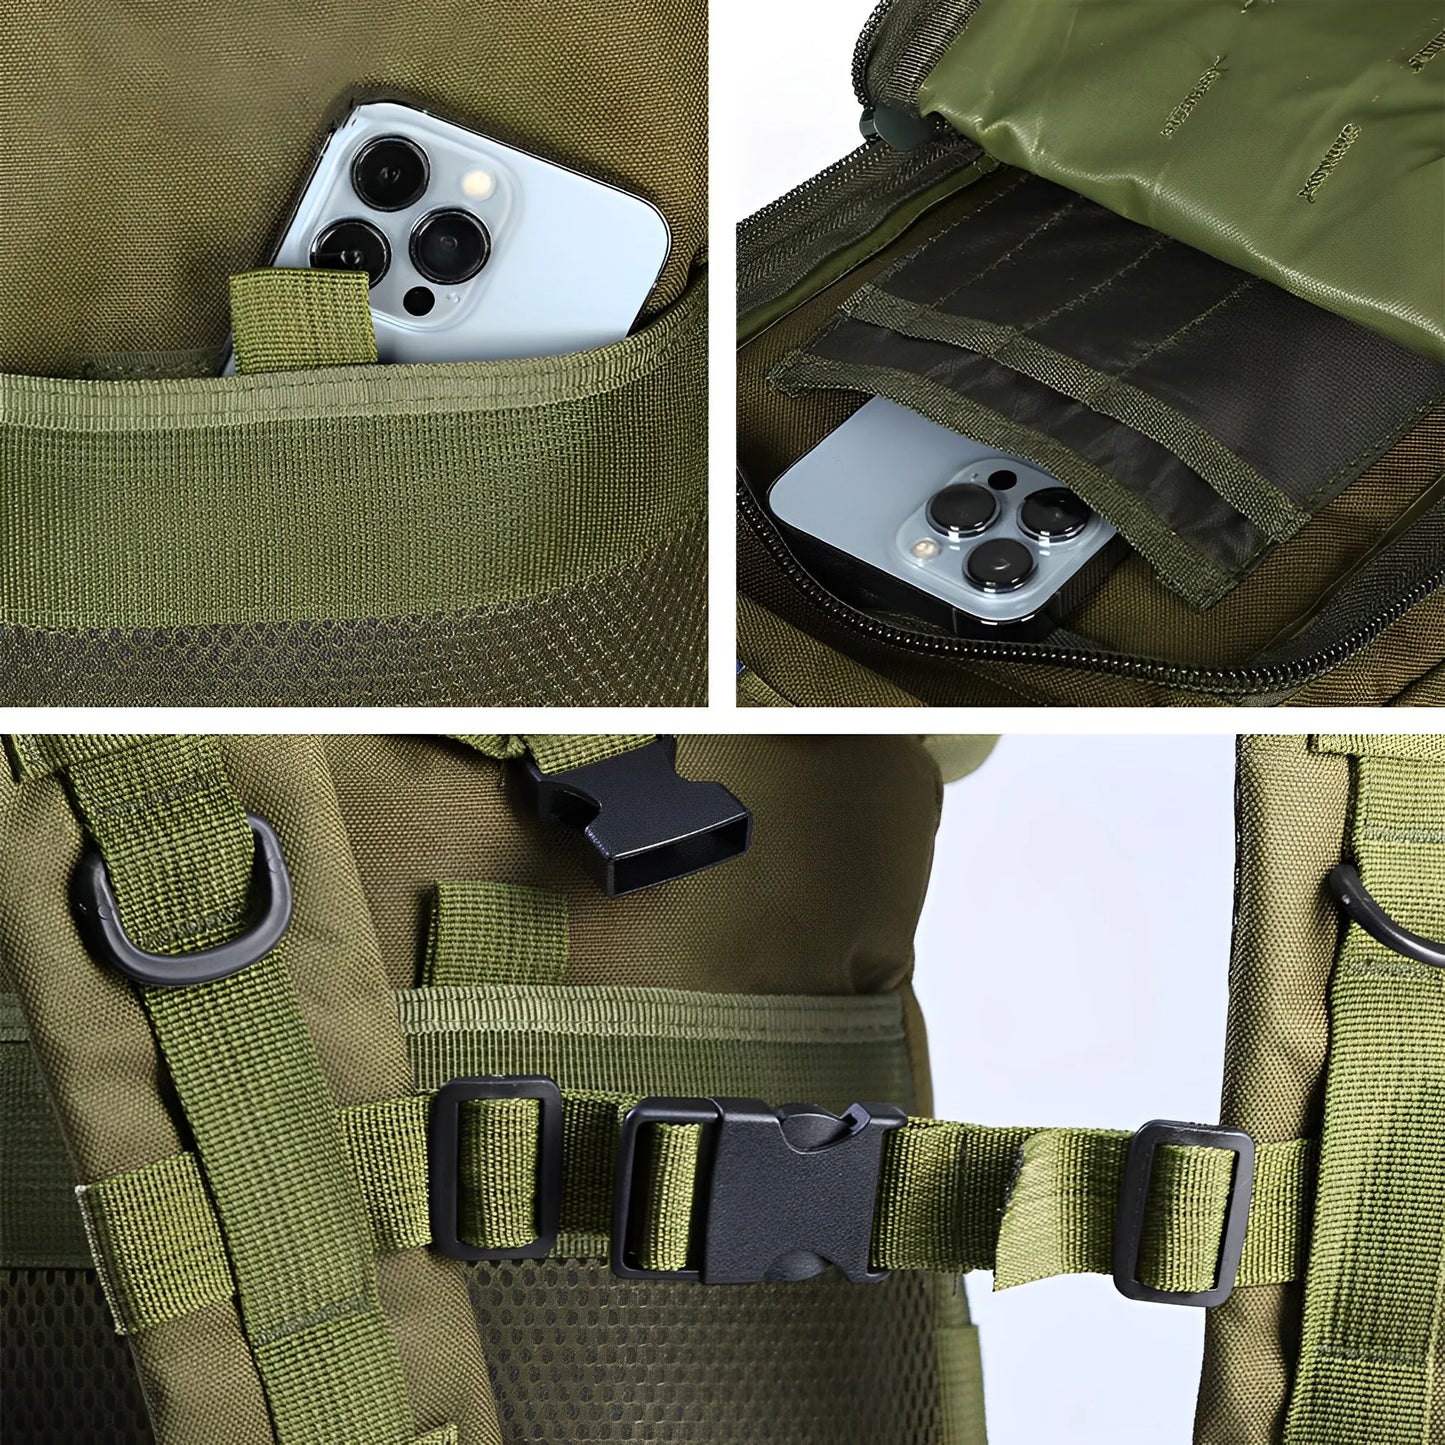 Syzm 50L o 30L Mochila táctica Bolso de la bolsa de la mochila Moldia Molle para hombres Bolsas de pesca de mochila de senderismo al aire libre